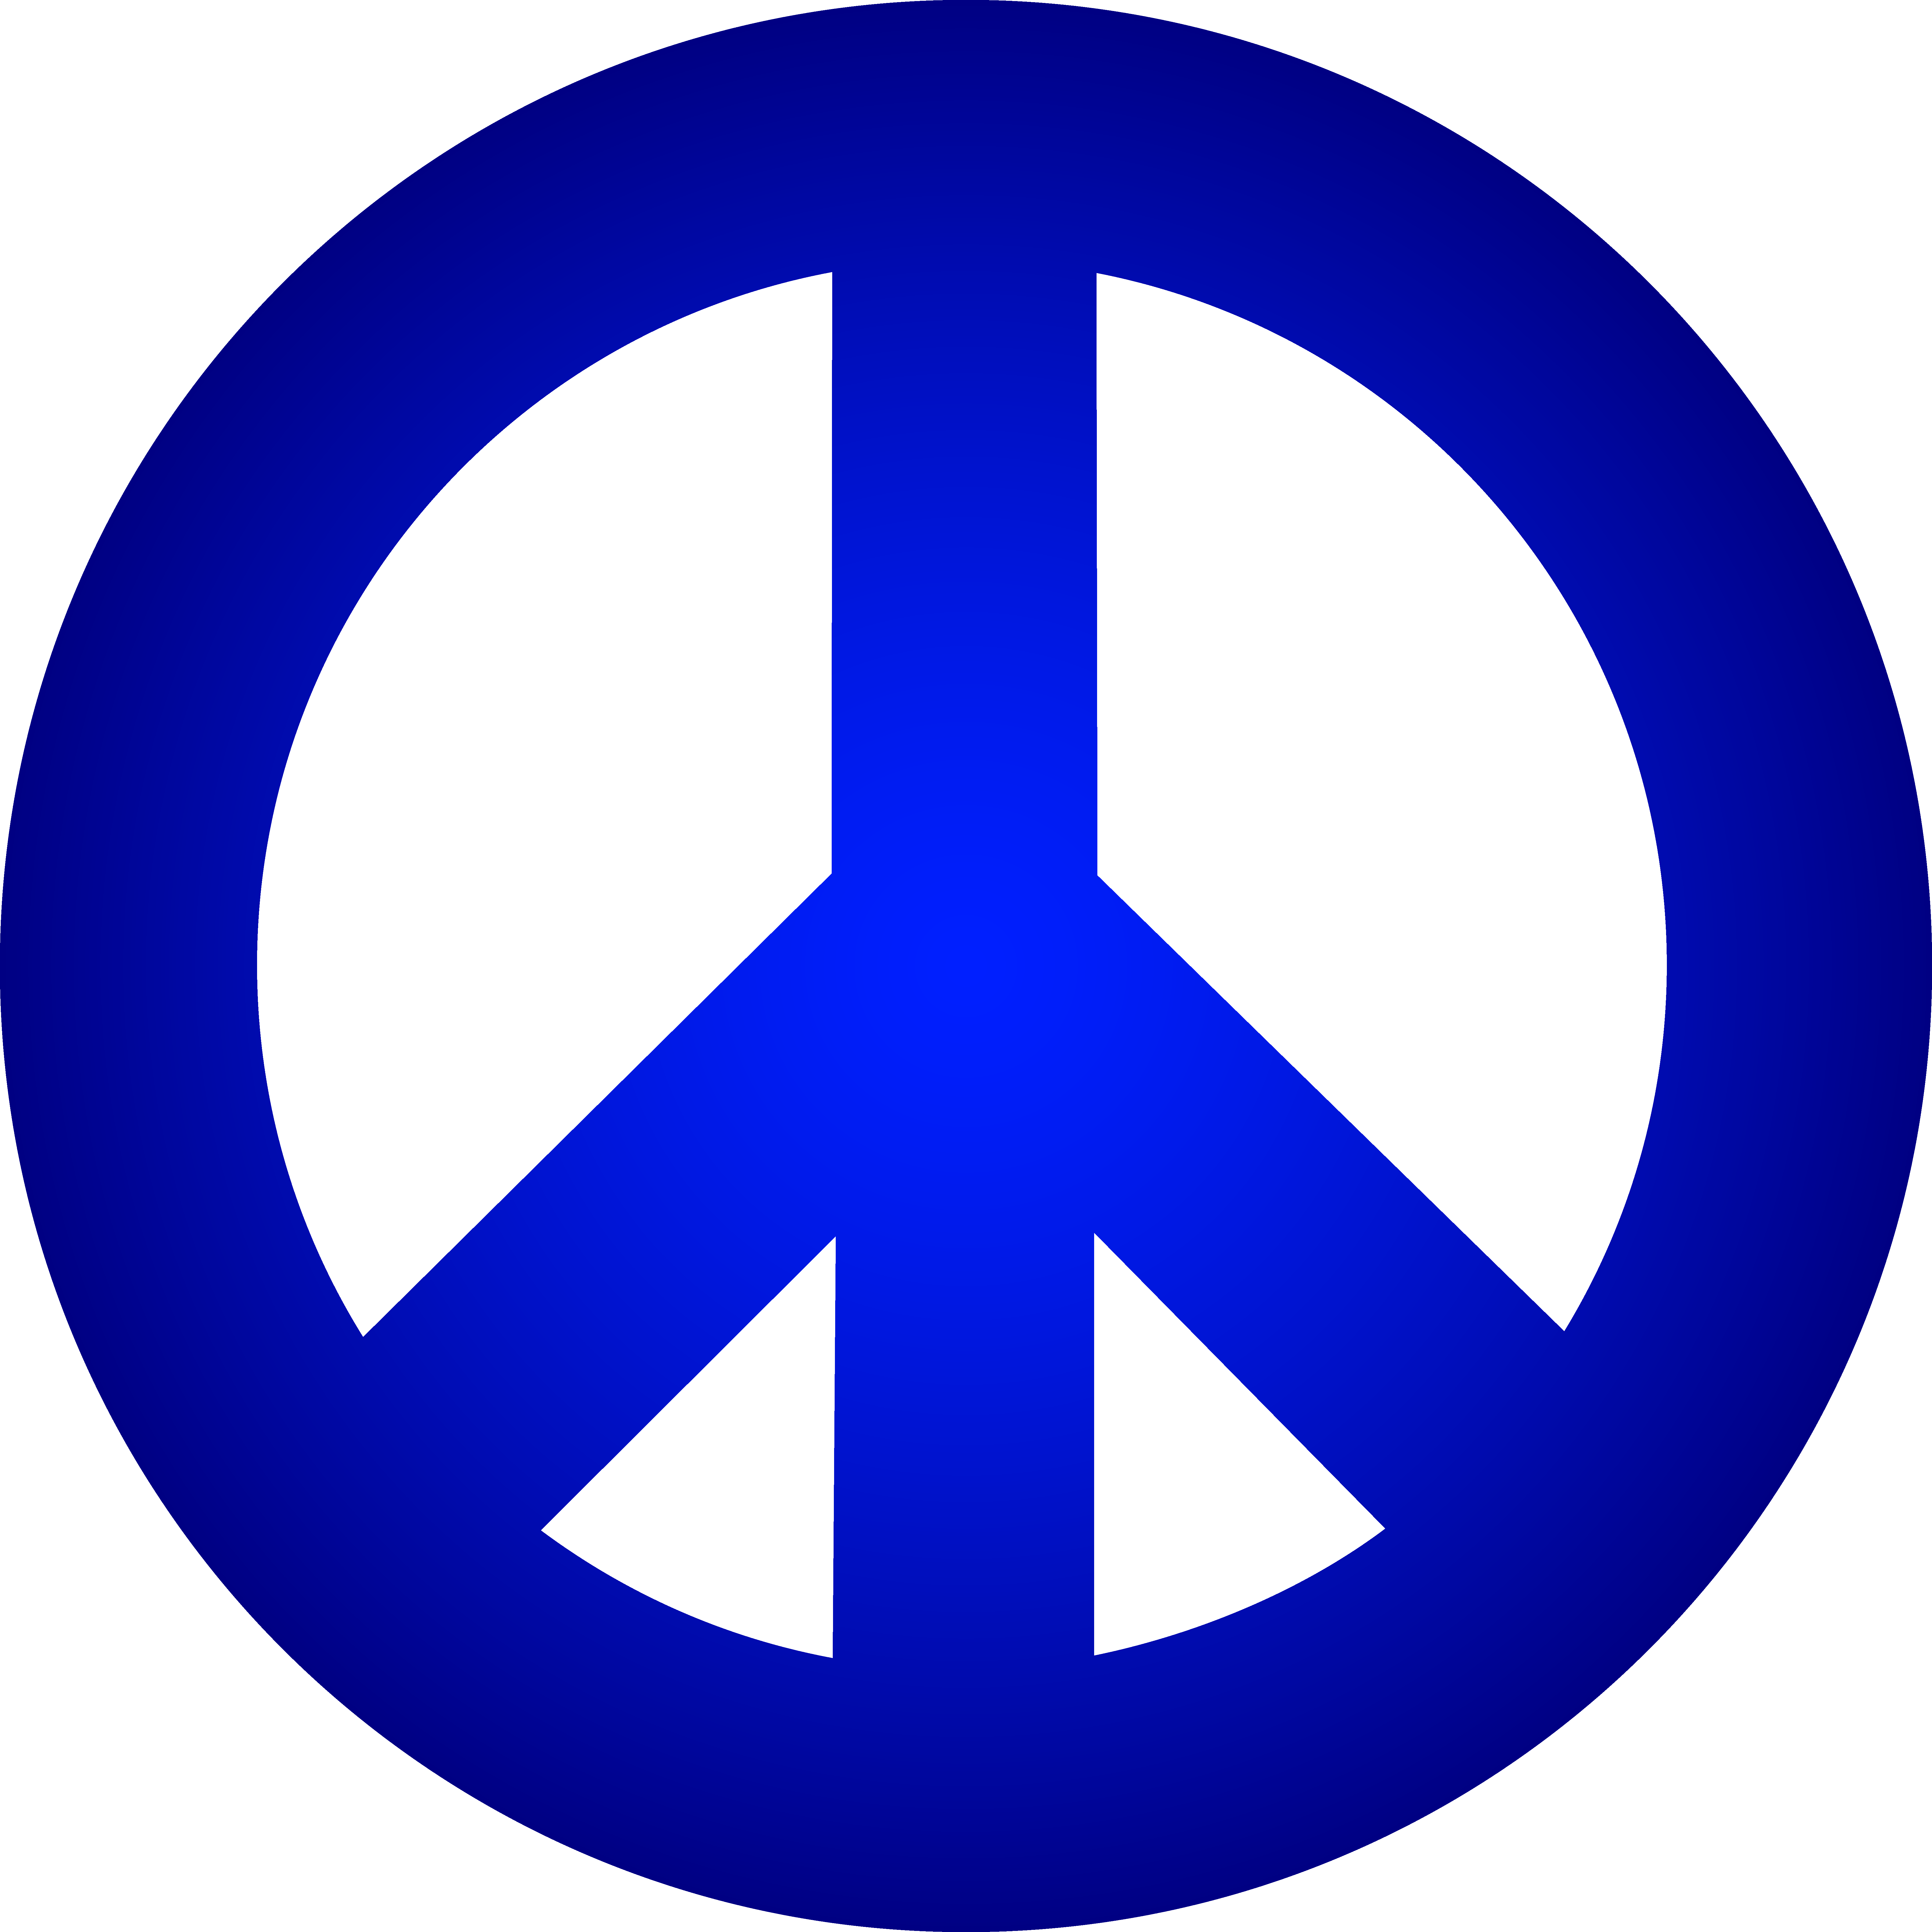 Peace Sign Symbol Clipart Best